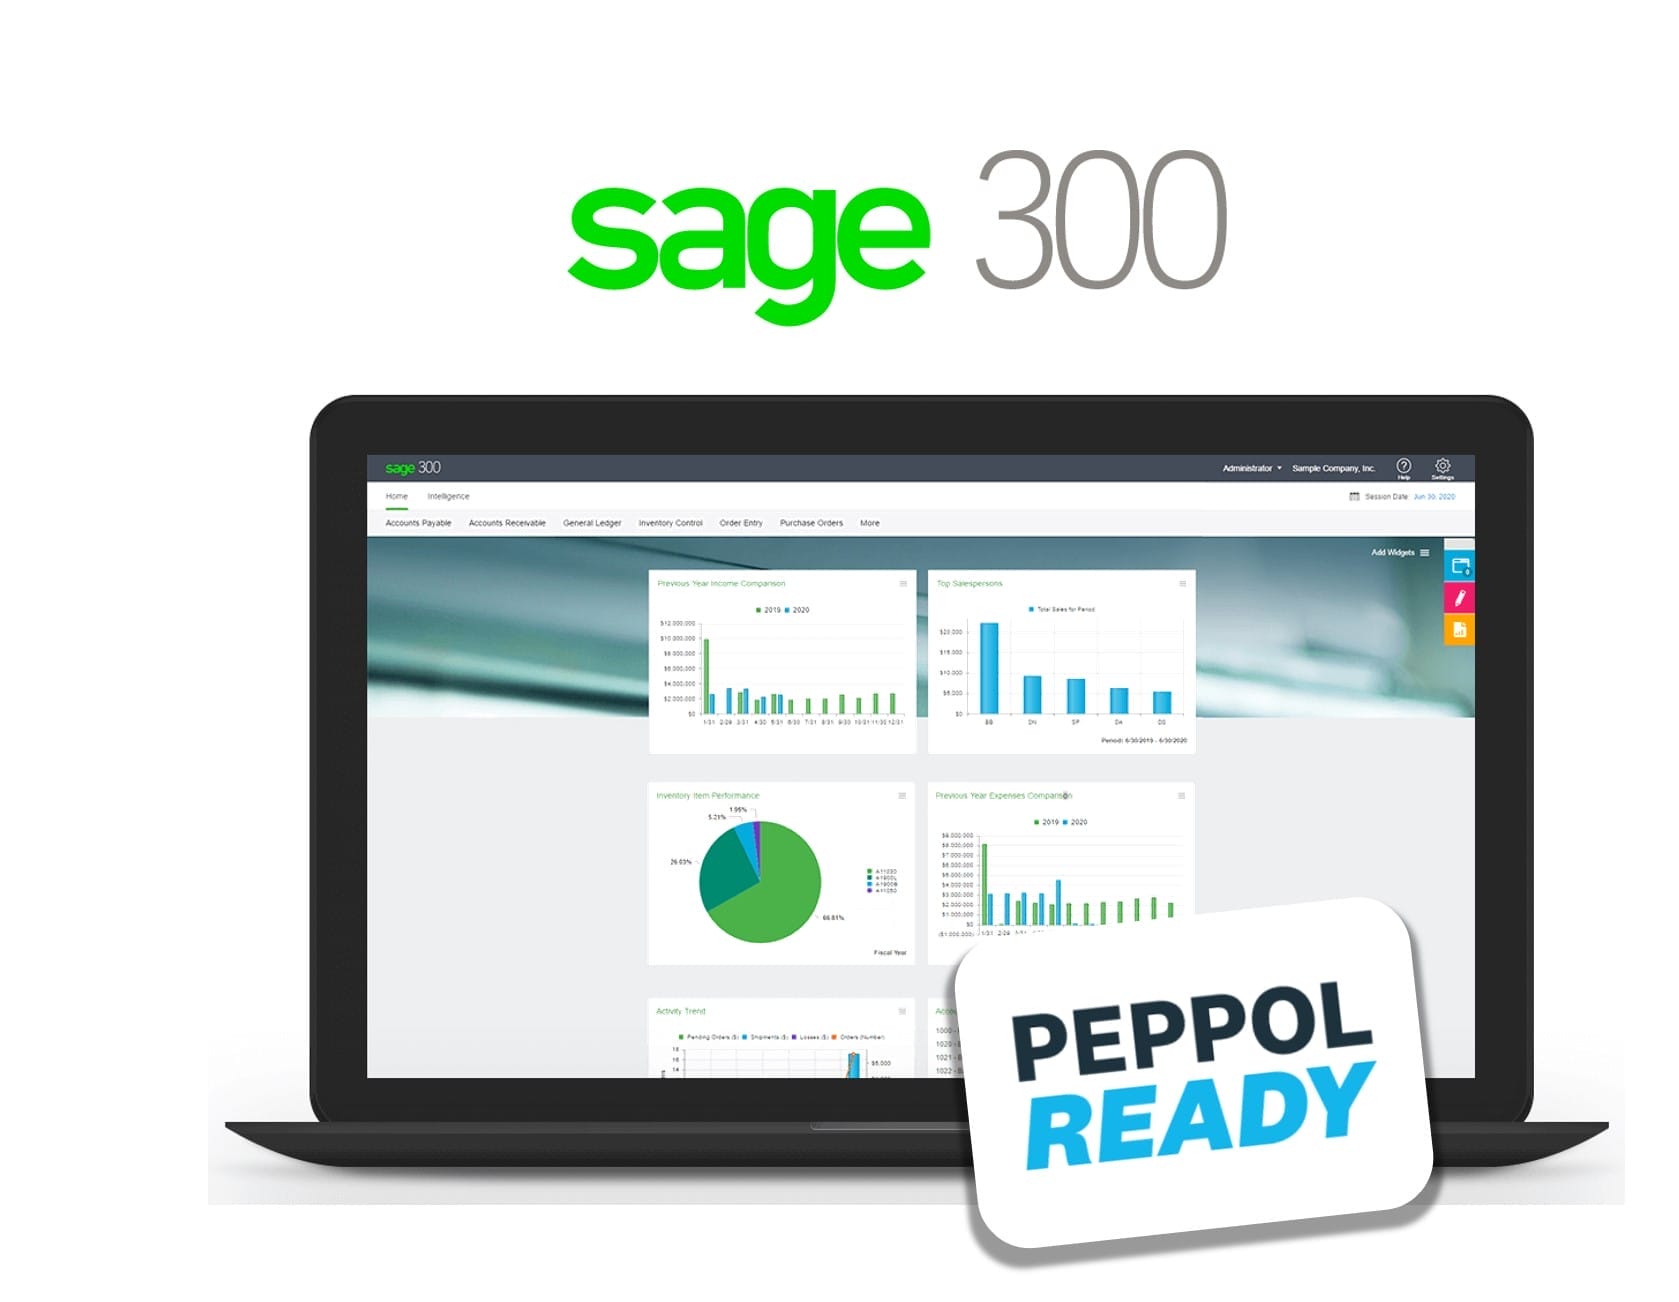 Sage 300 Web Interface in a laptop